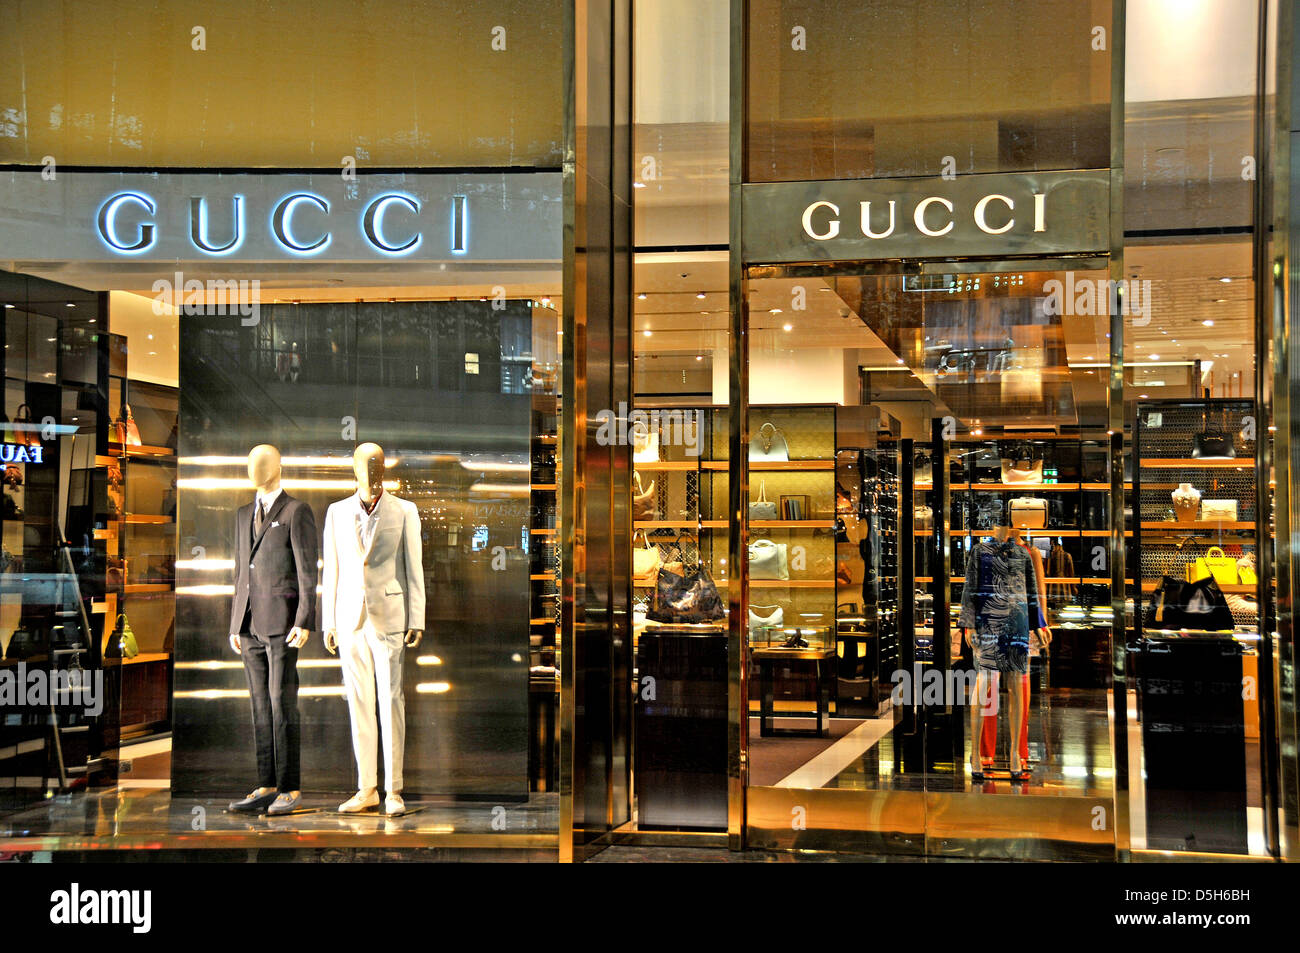 Gucci boutique Dubai mall Dubai UAE Stock Photo, Royalty Free Image ...